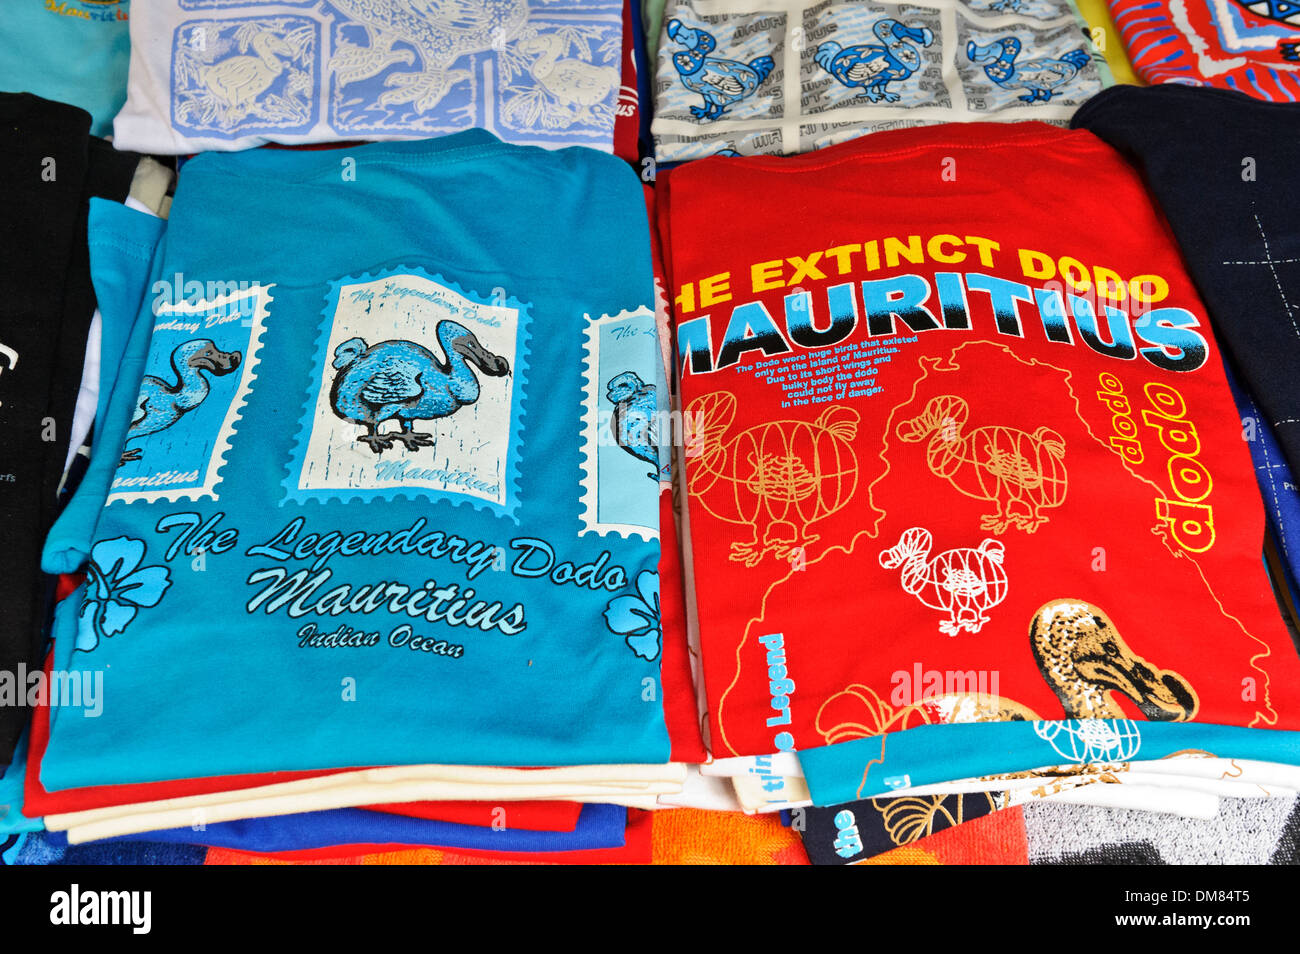 T-Shirts with Mauritius Logo on sale, Mauritius Stock Photo - Alamy